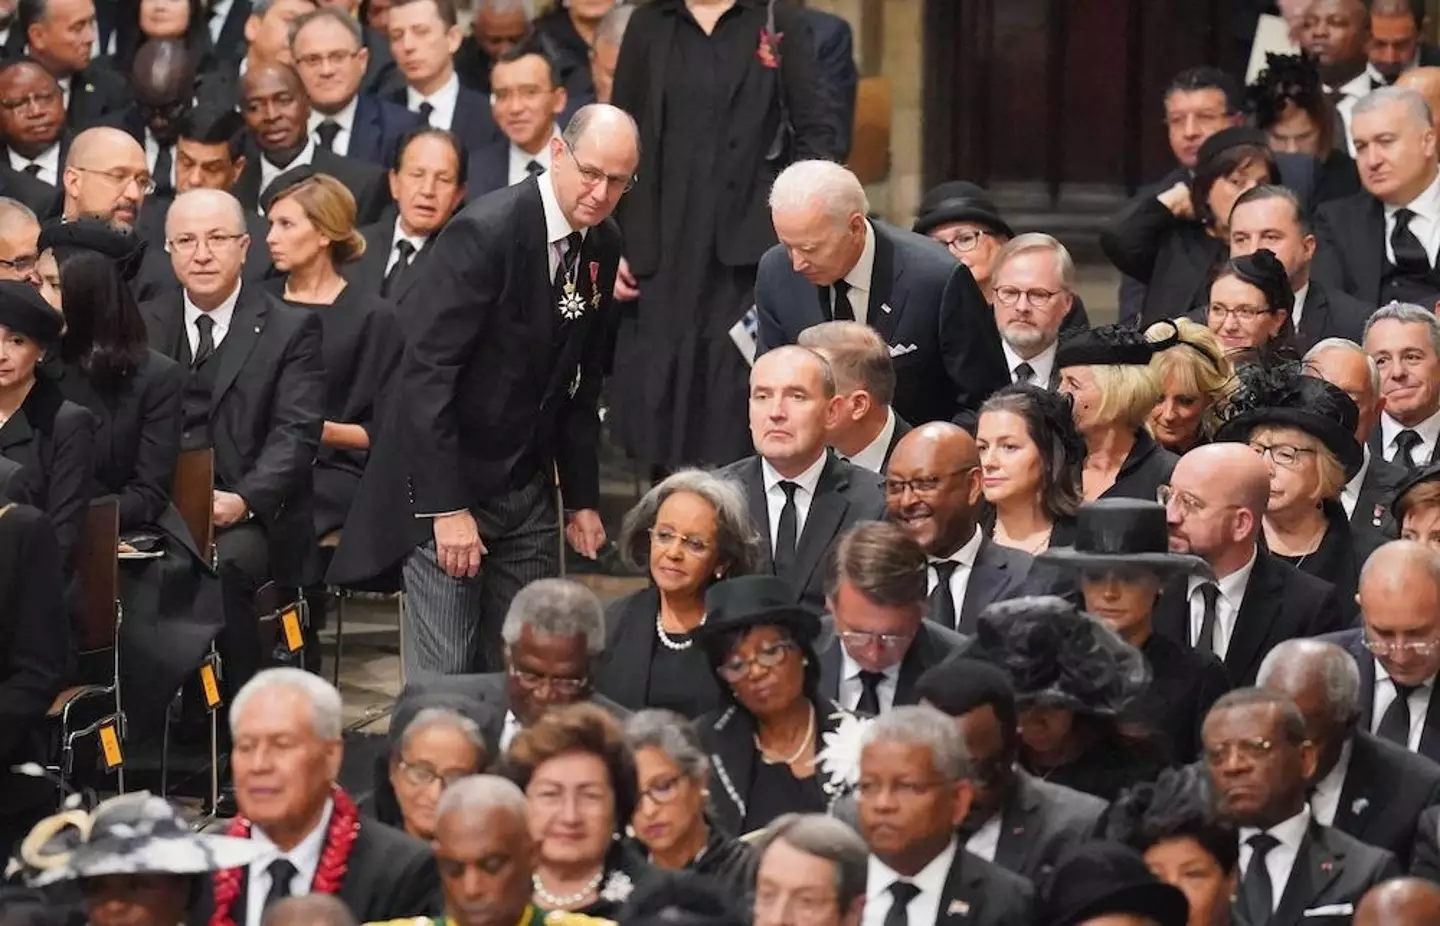 US President Joe Biden has been given an aisle seat 14 rows back.